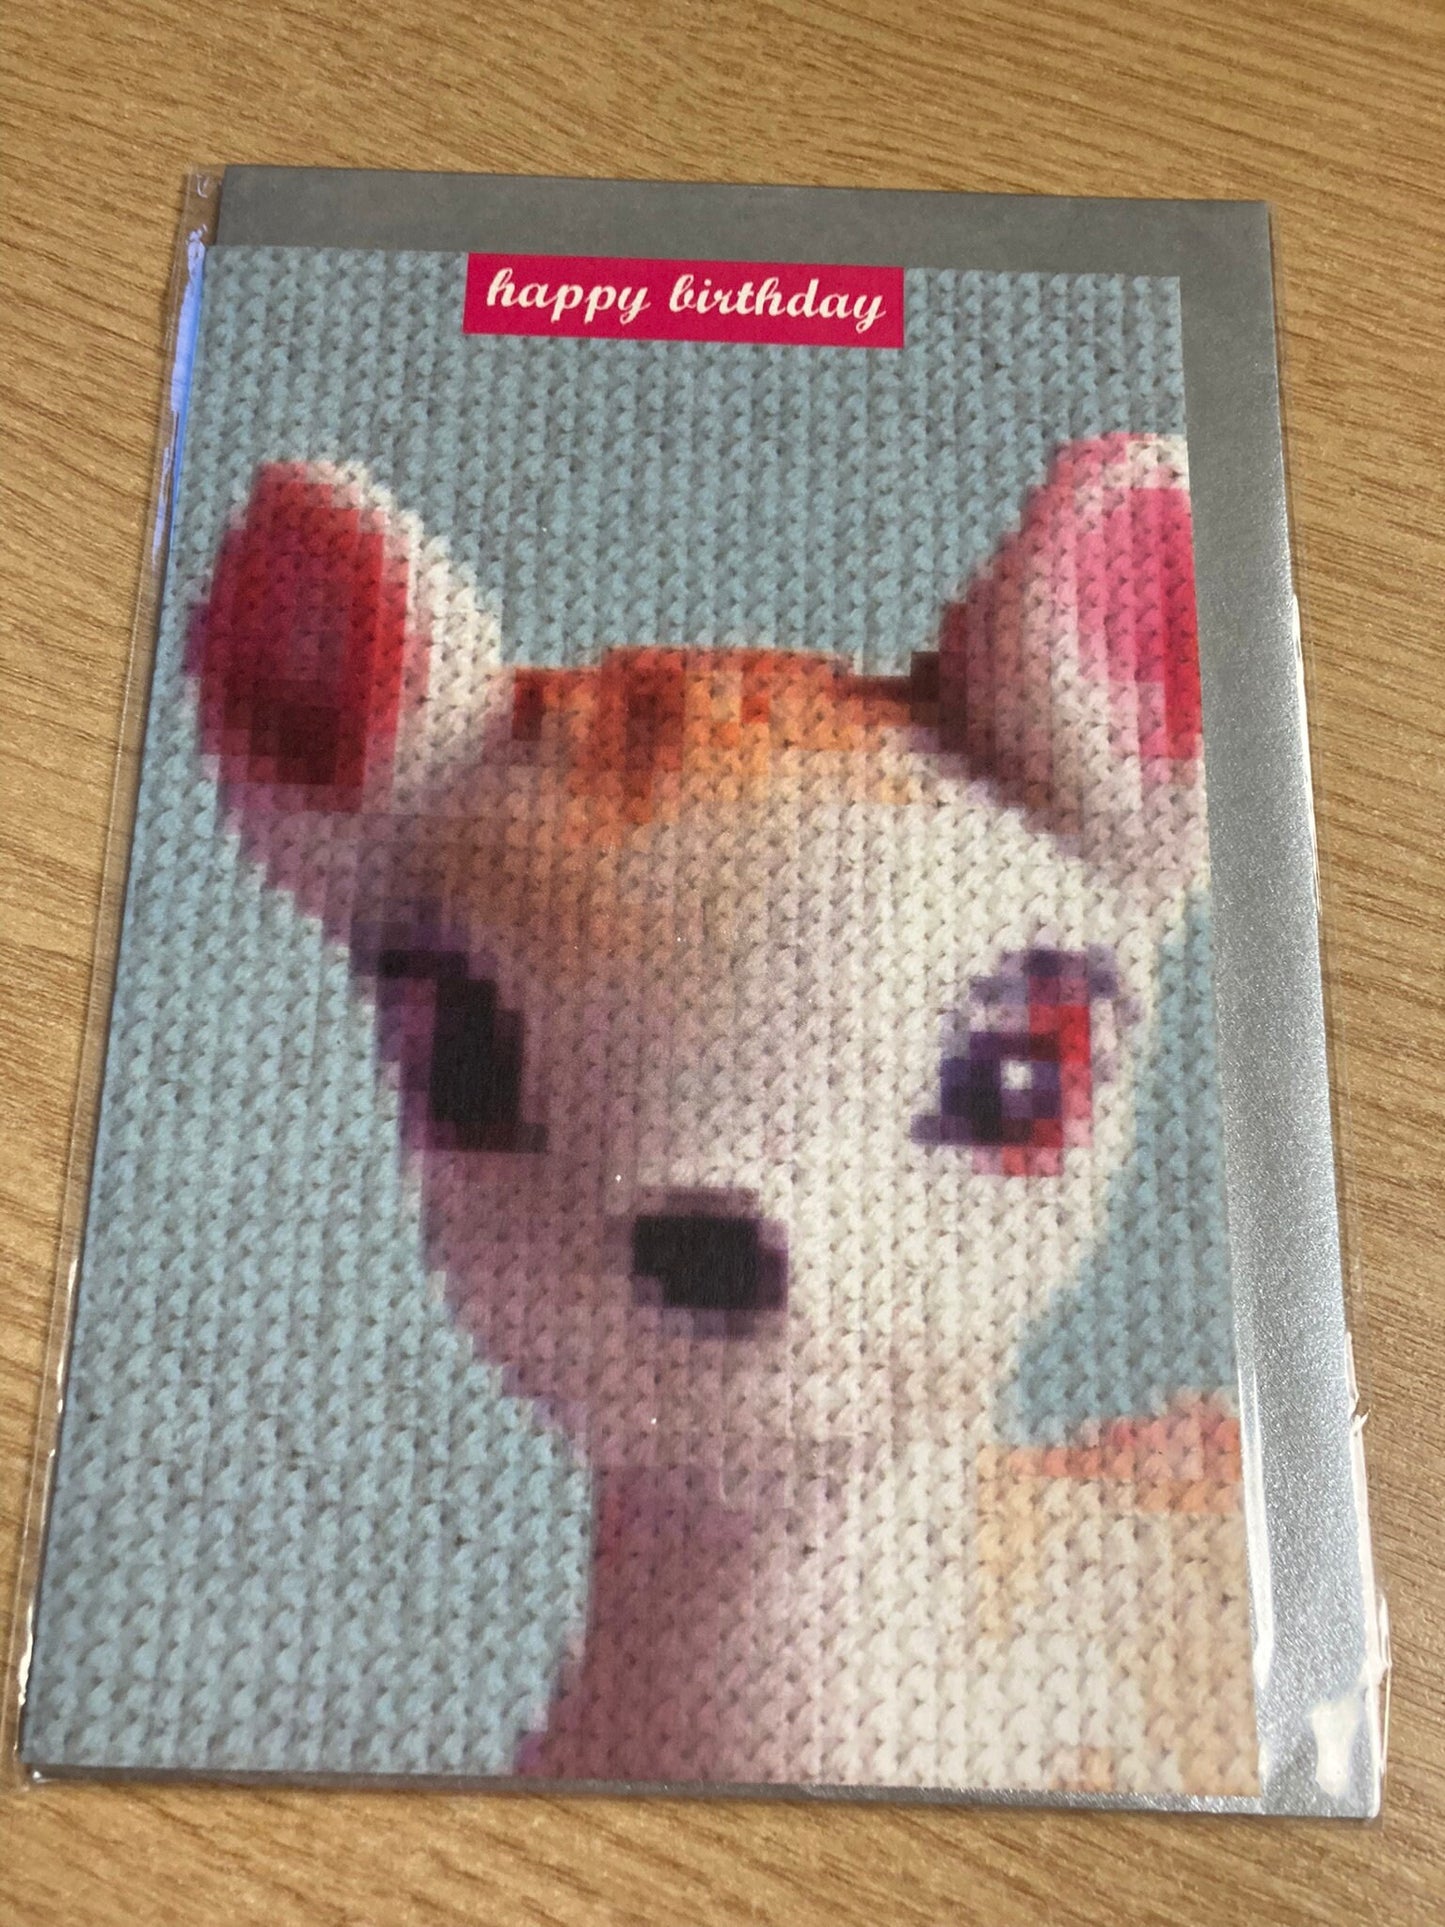 Vintage retro kitsch happy birthday card 1980s knitted bambi deer cross stitch